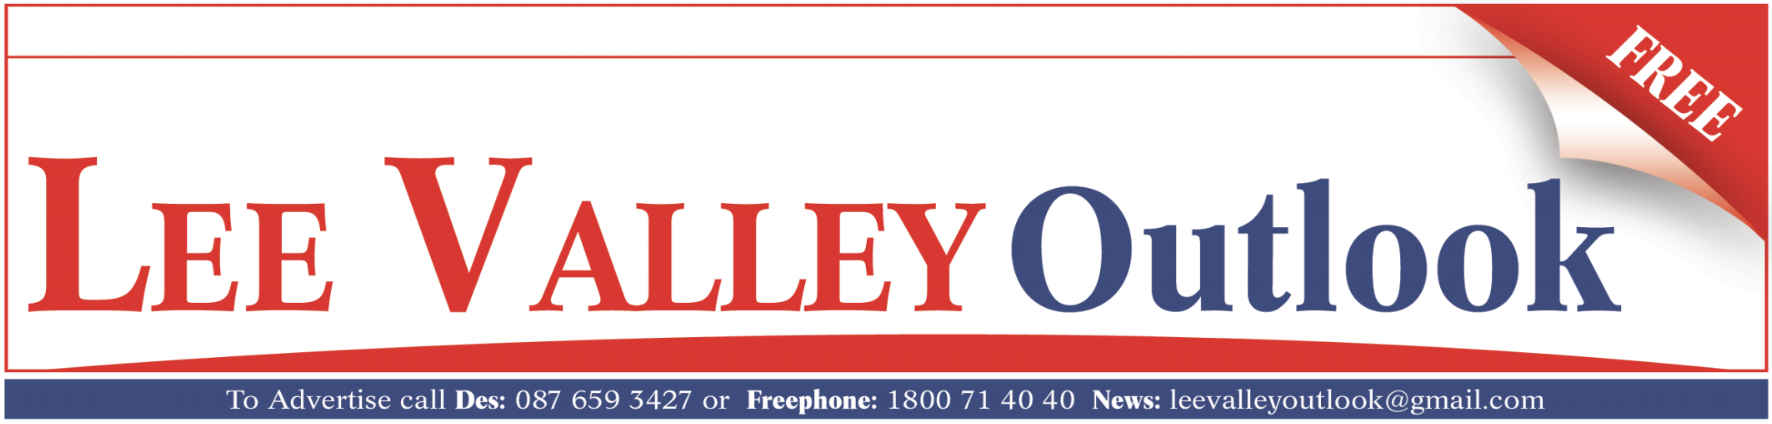 Lee Valley Outlook Logo